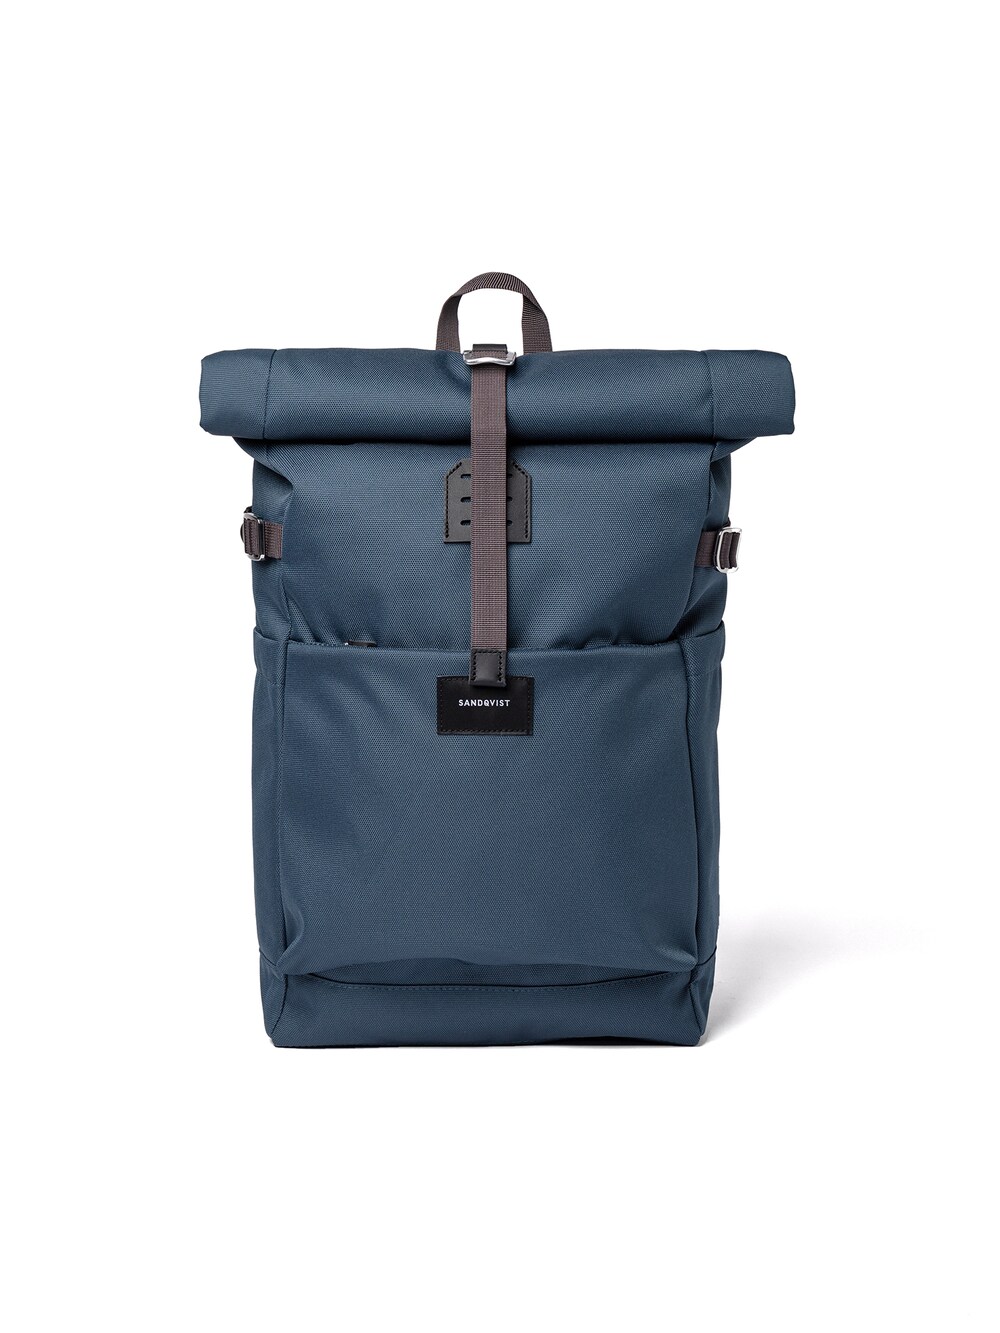 Рюкзак SANDQVIST Ilon, синий рюкзак sandqvist ilon оливковый размер one size